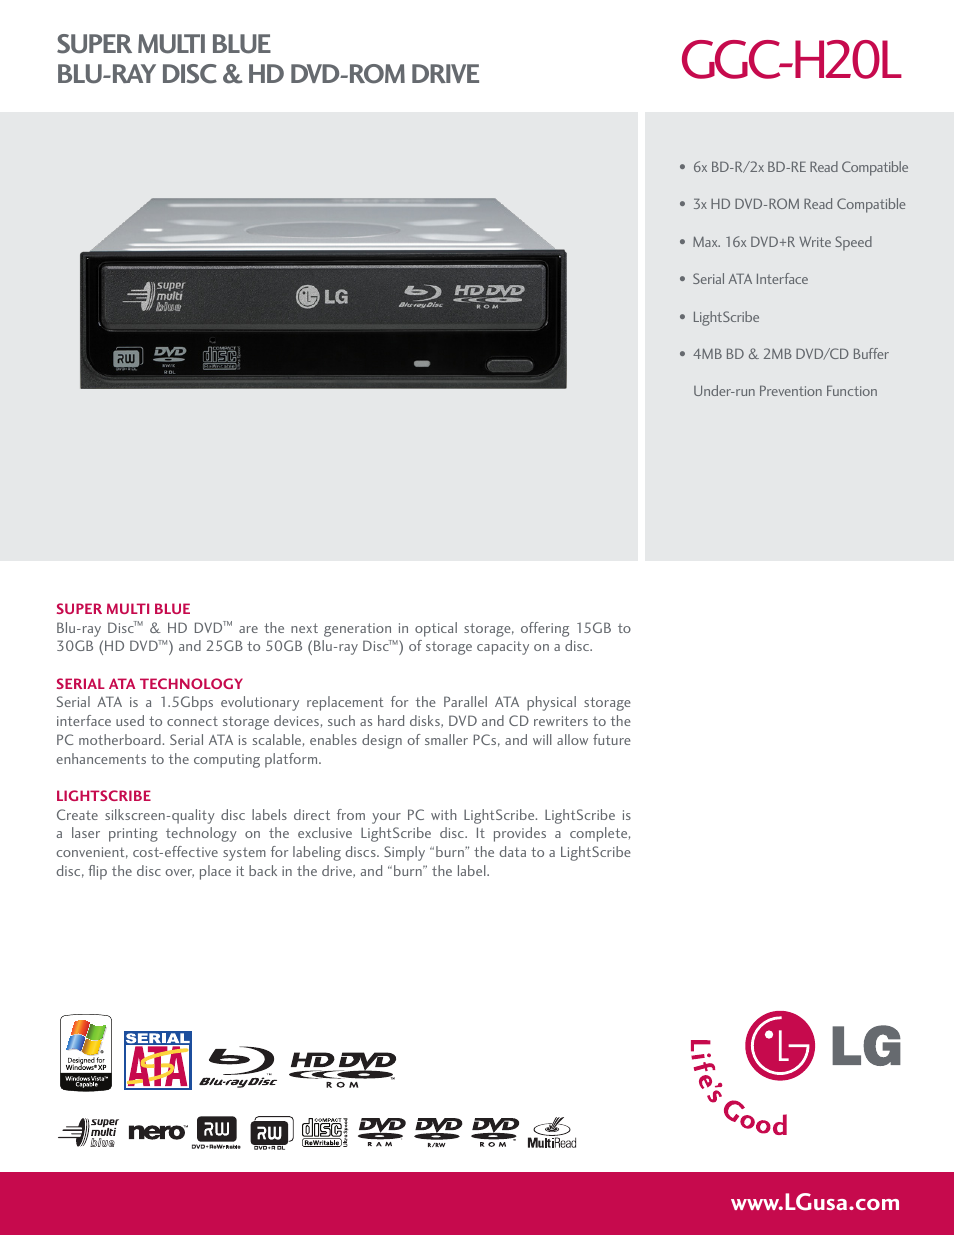 LG GGC-H20L User Manual | 2 pages